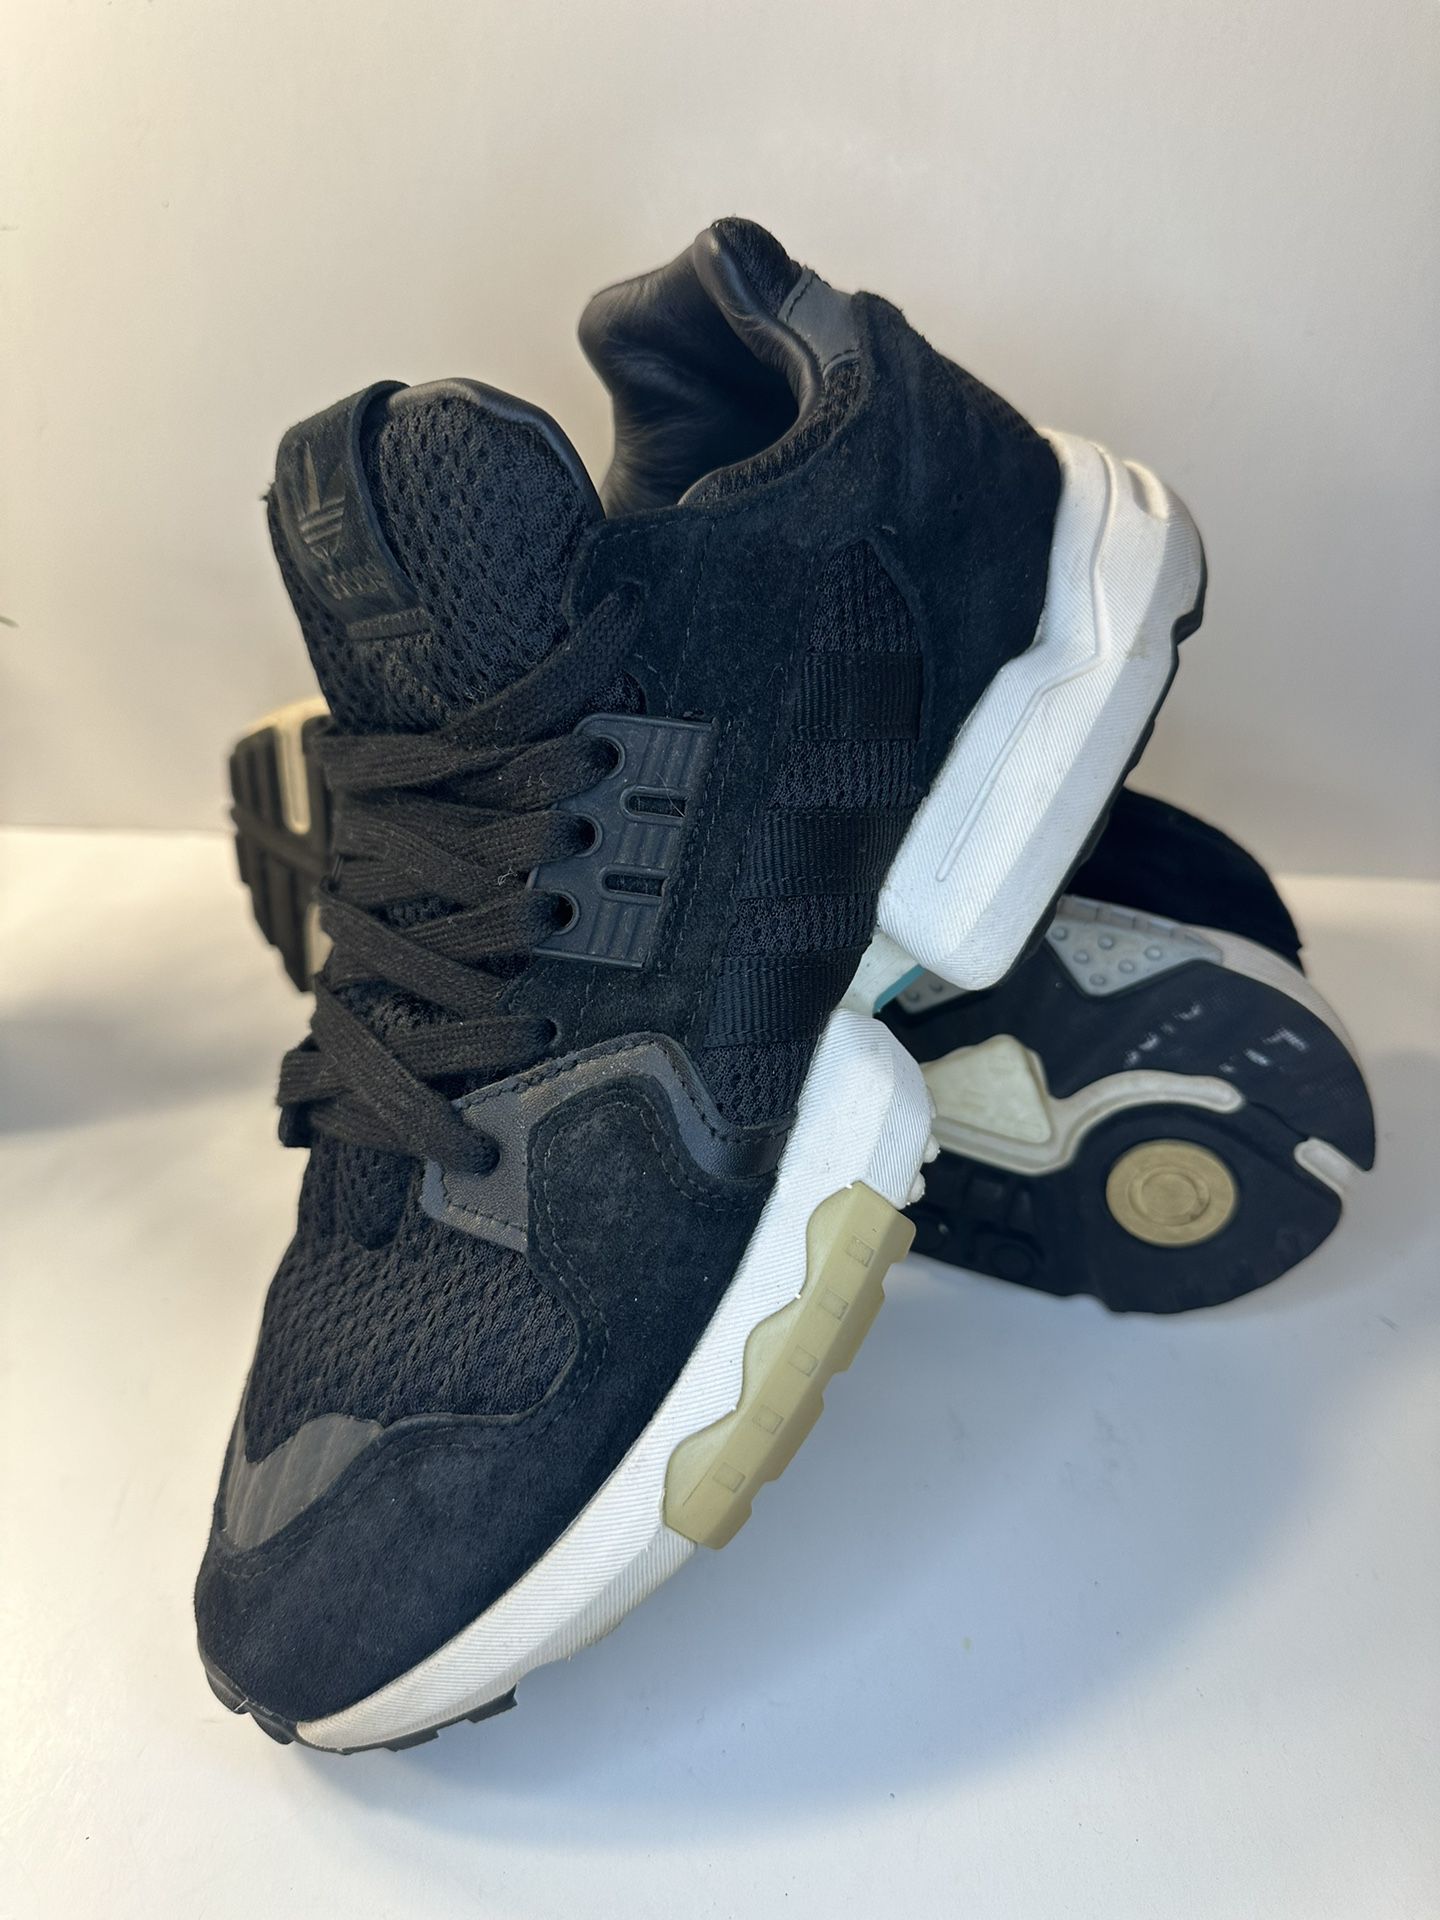 Adidas Originals ZX Torsion Boost Black White Sneakers EE4805 Size 9 Black